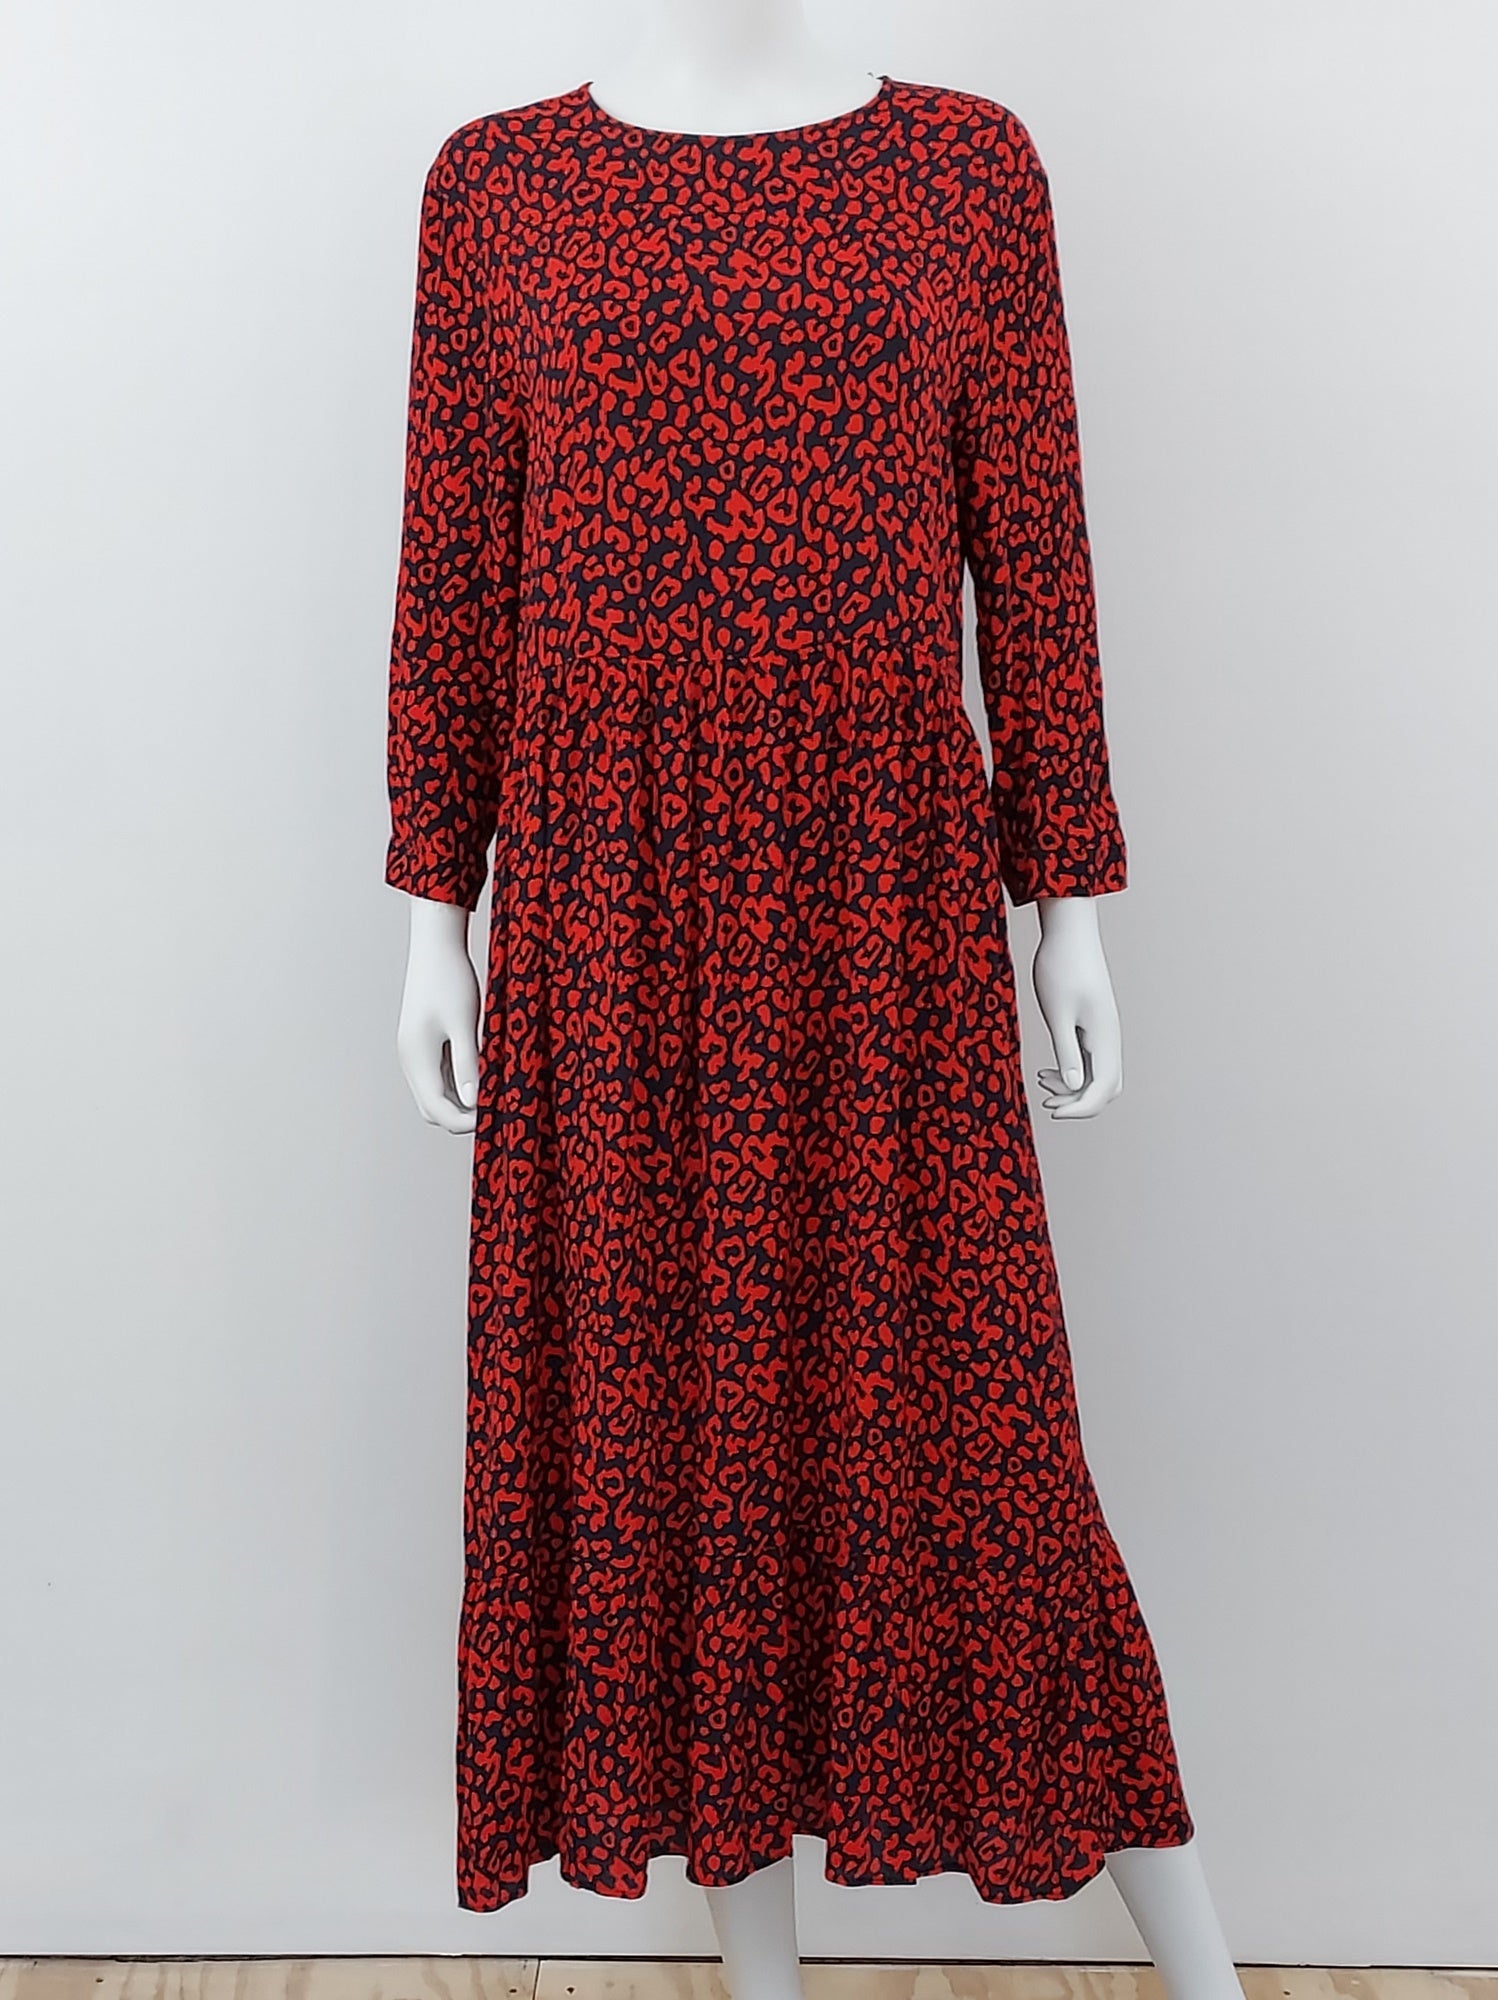 Red Leopard Dress Size Medium